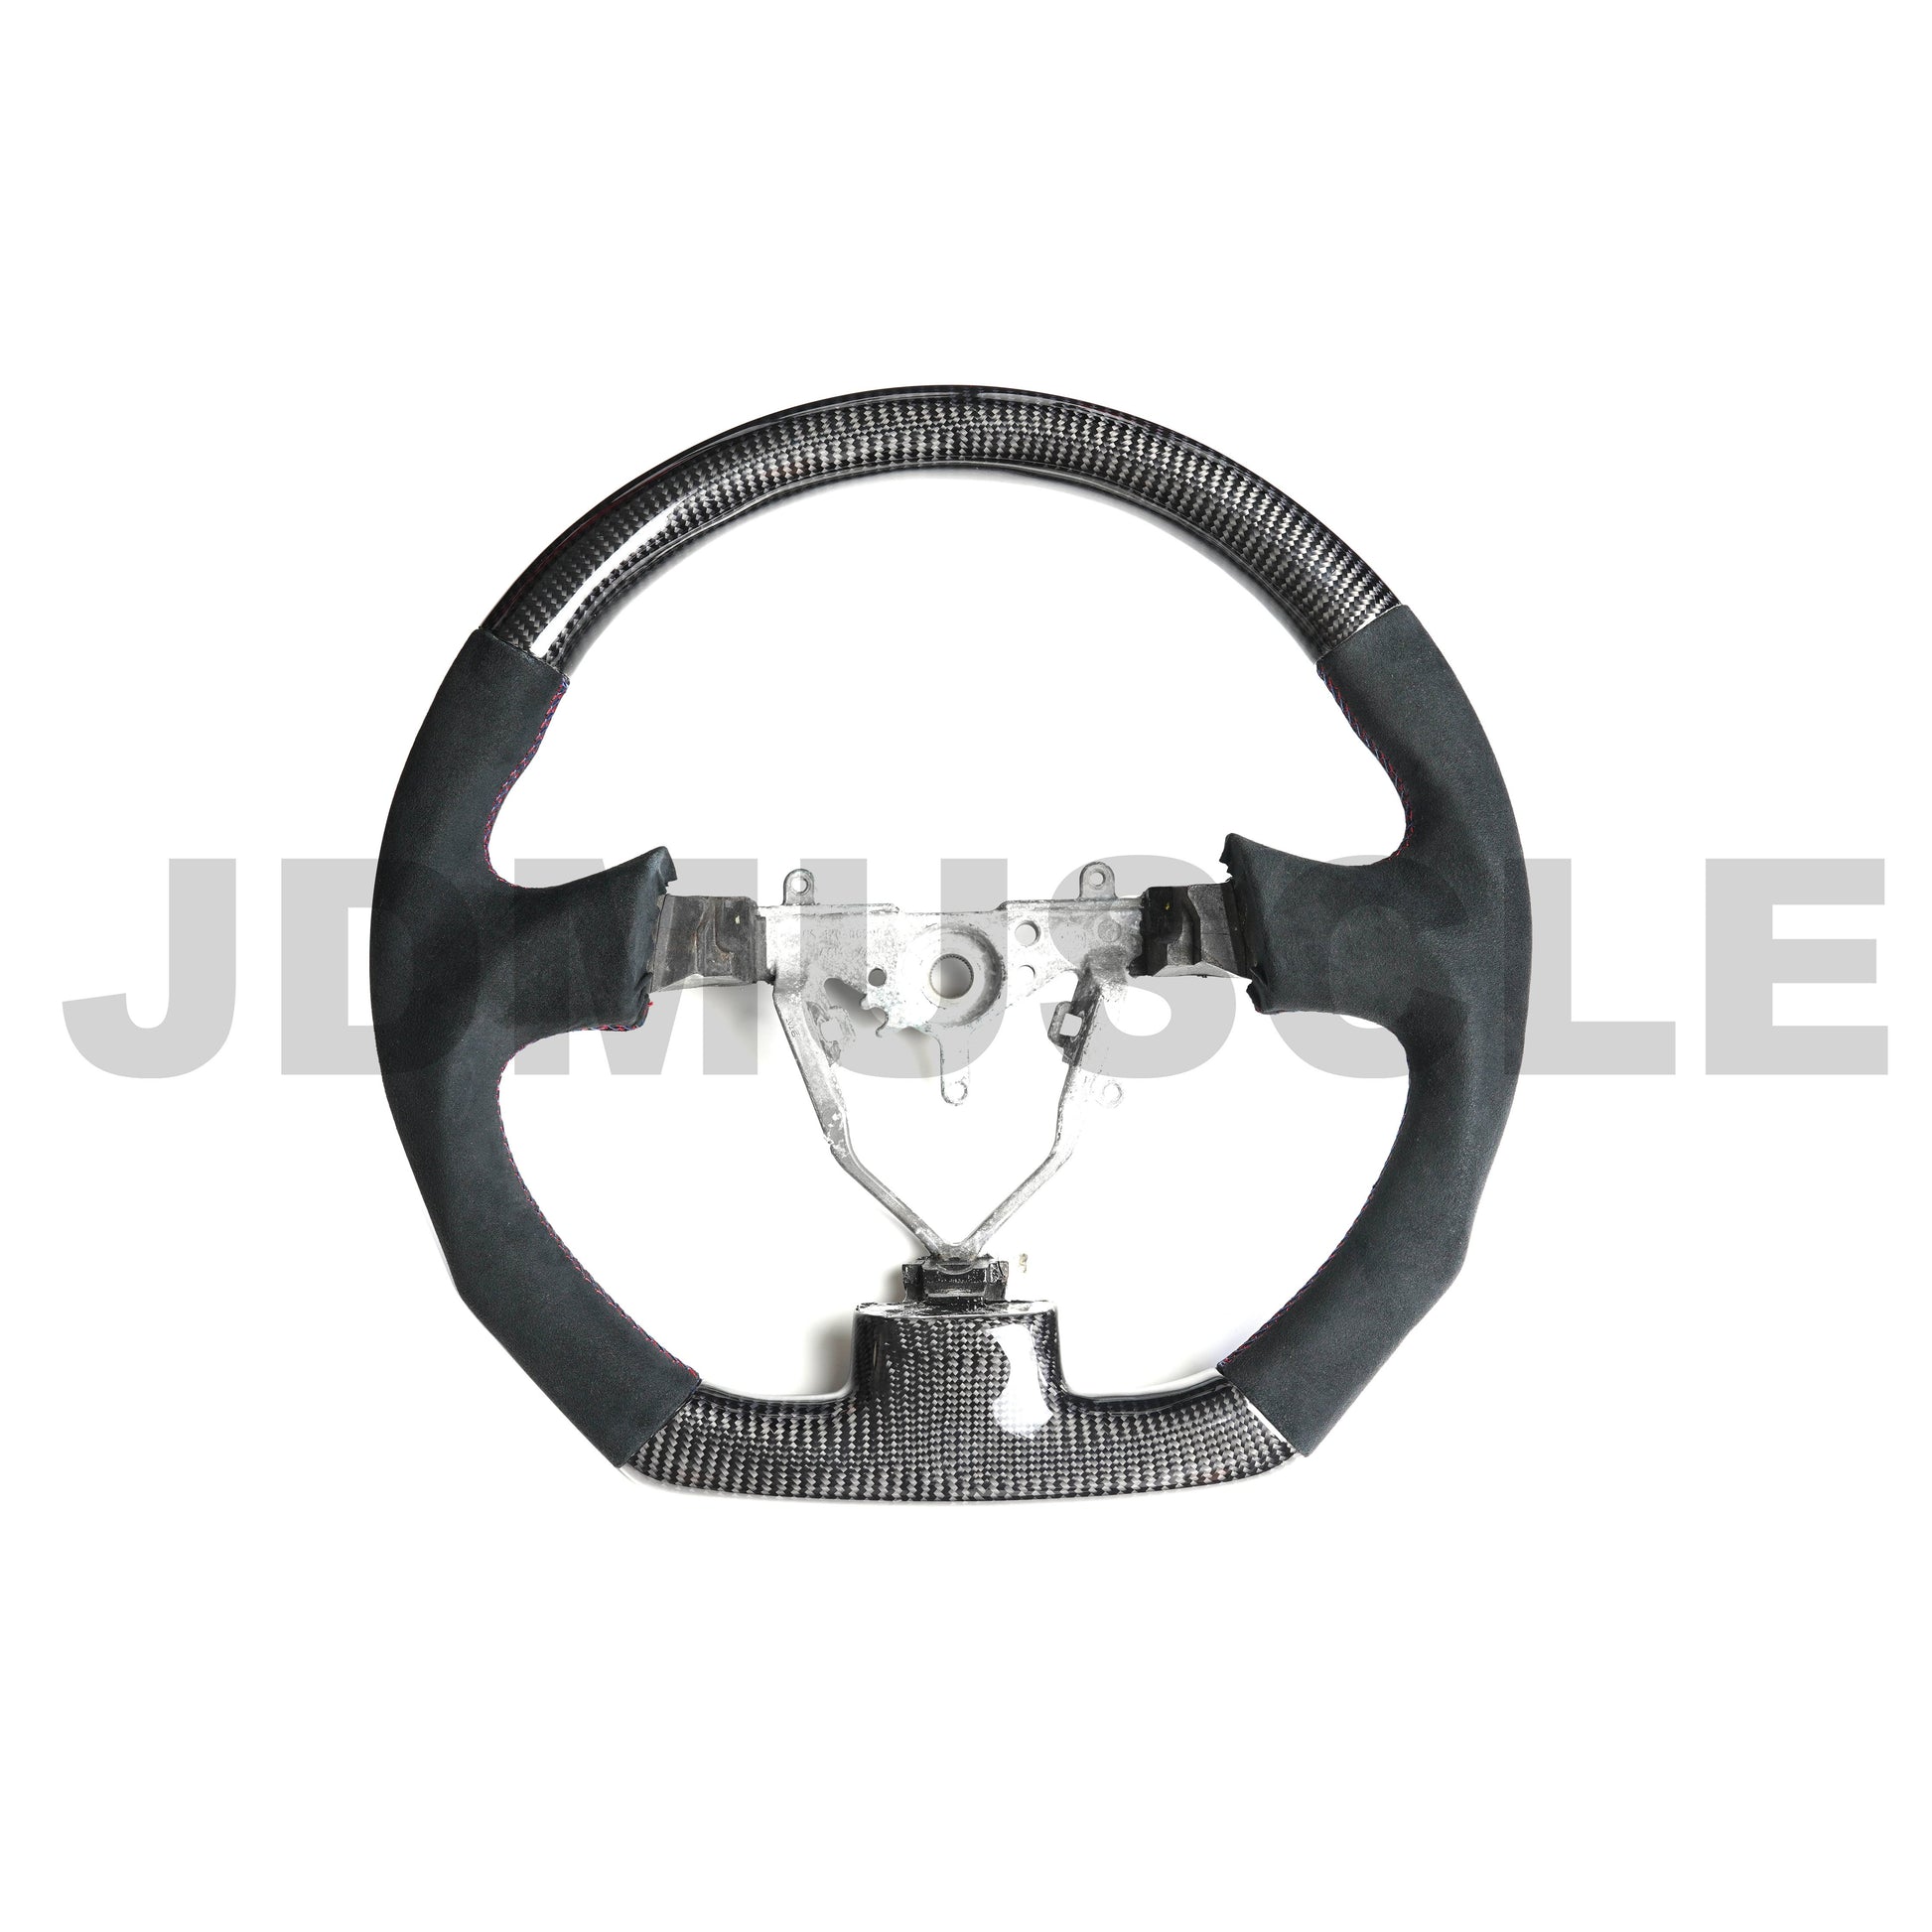 JDMuscle Custom Carbon Fiber Steering Wheel for 2005-2007 WRX/ STI-Steering Wheels-JDMuscle-JDMuscle